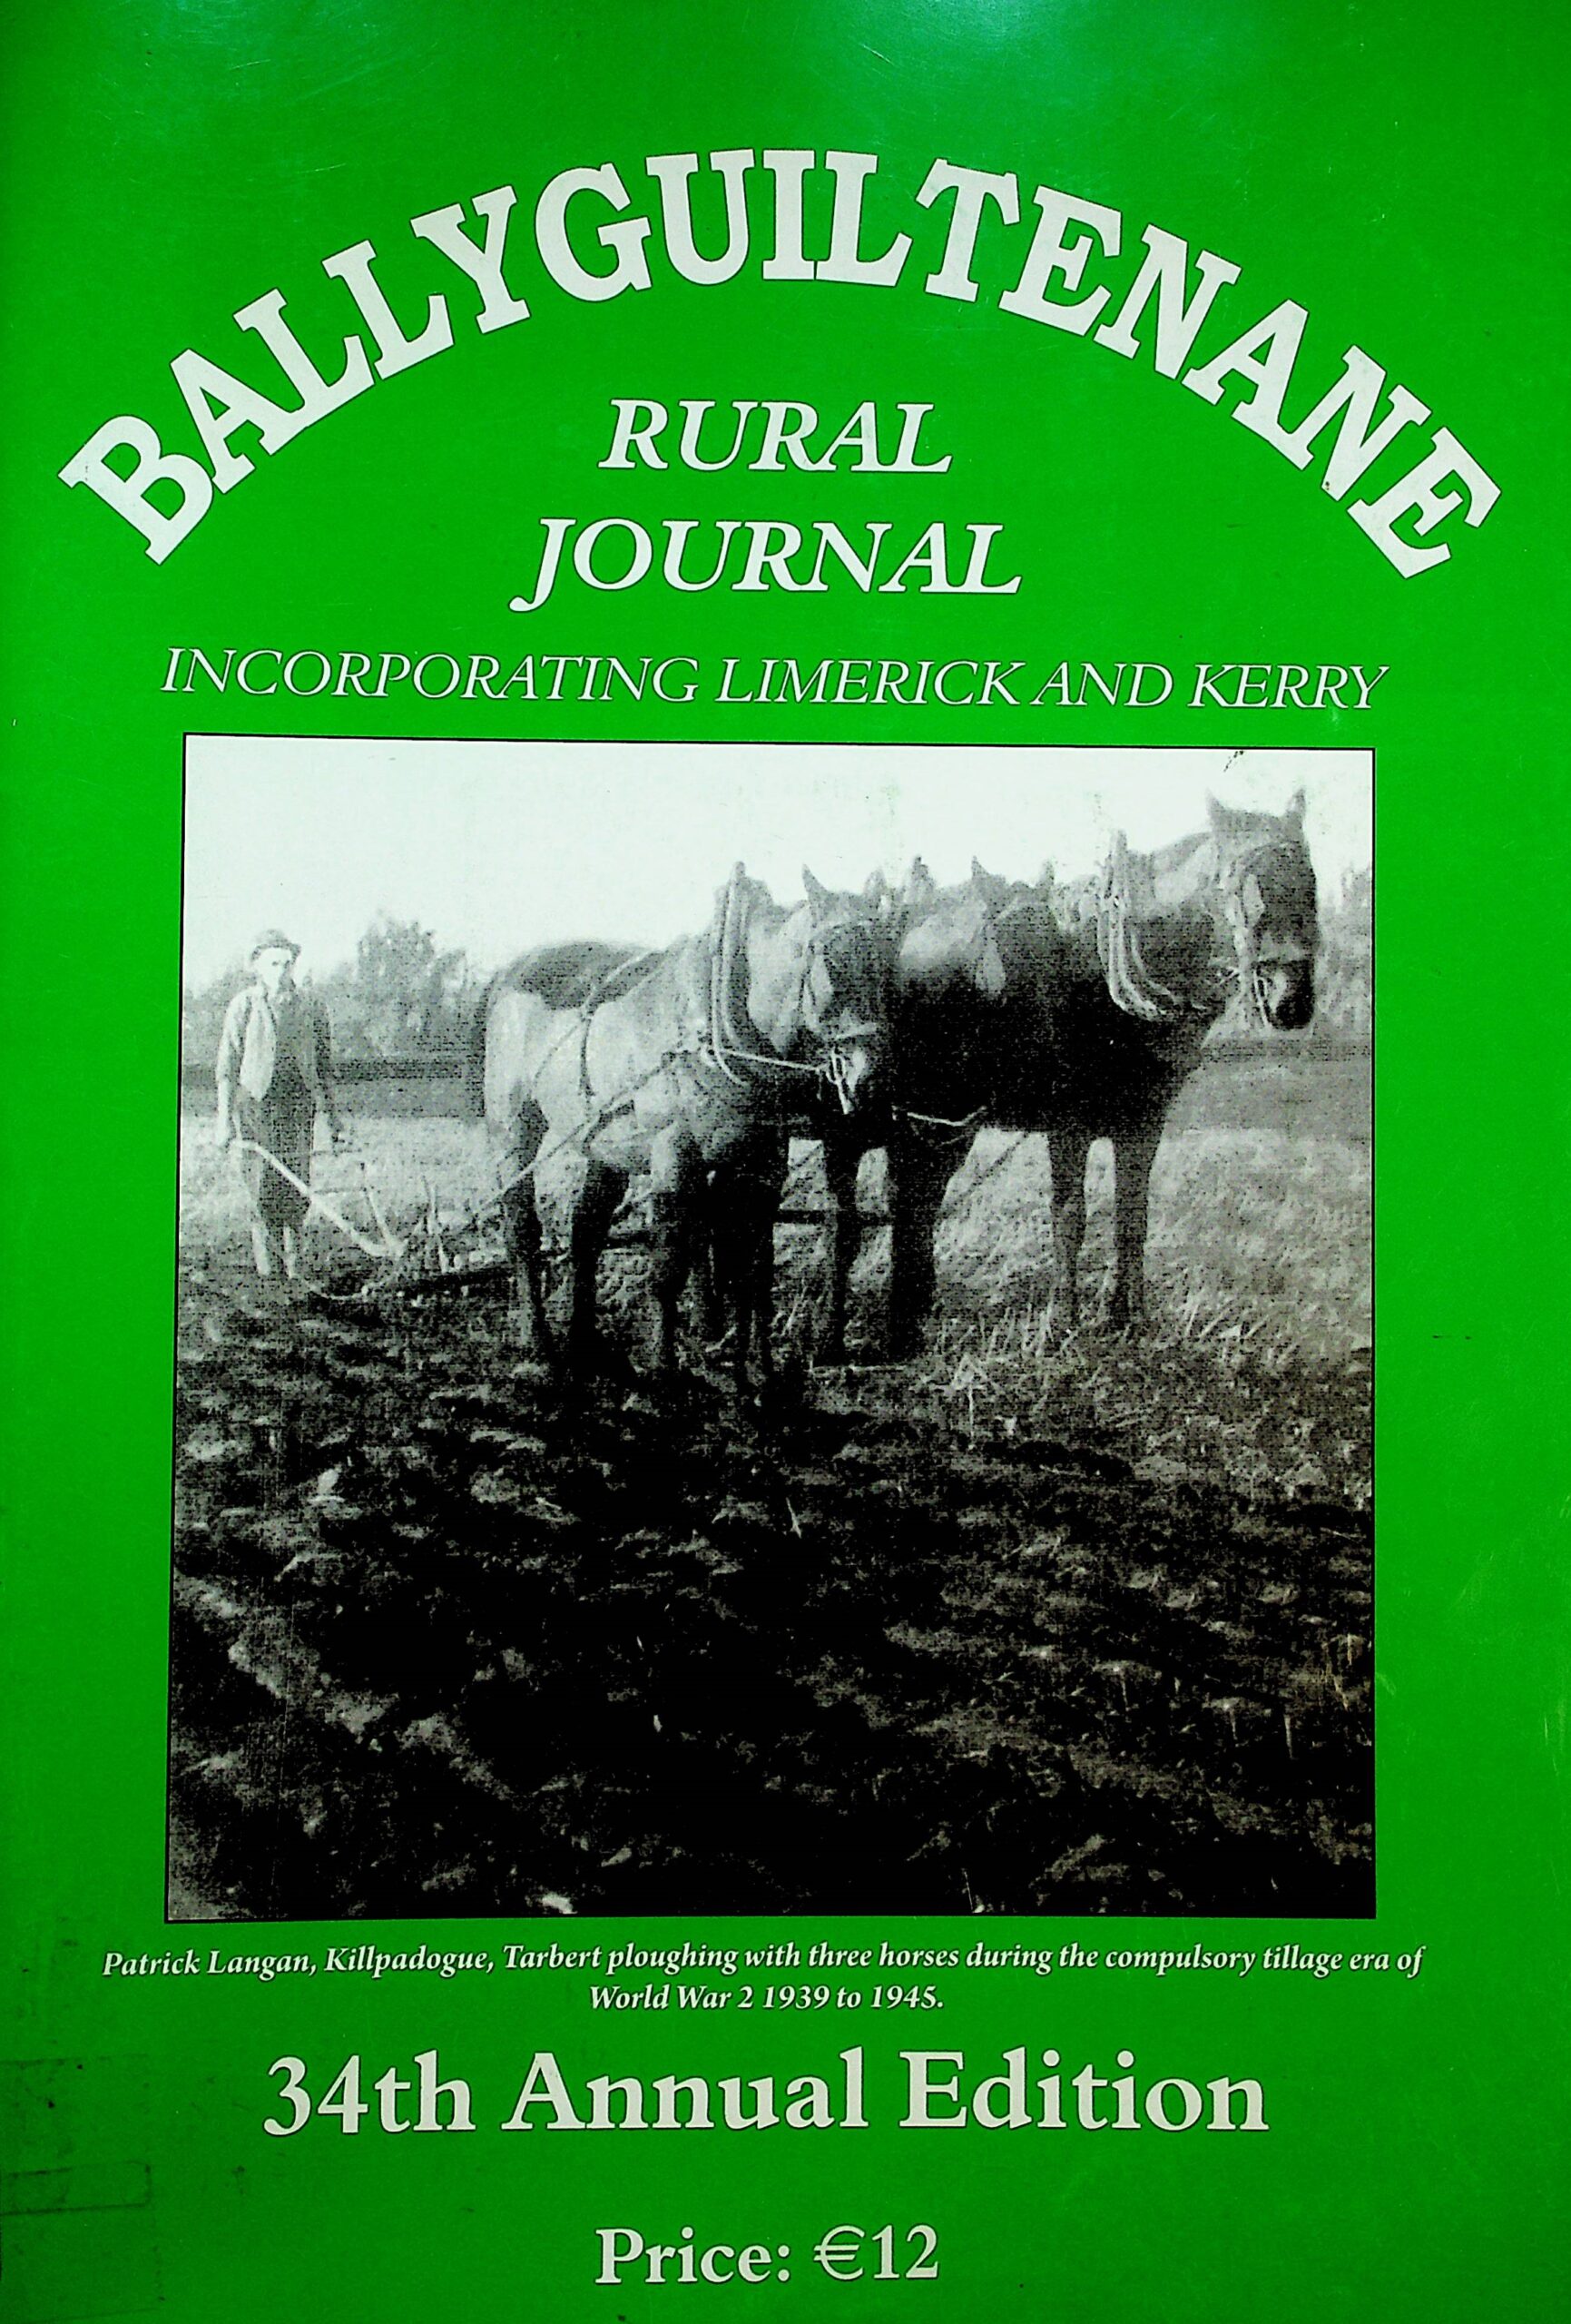 Ballyguiltenane Rural Journal